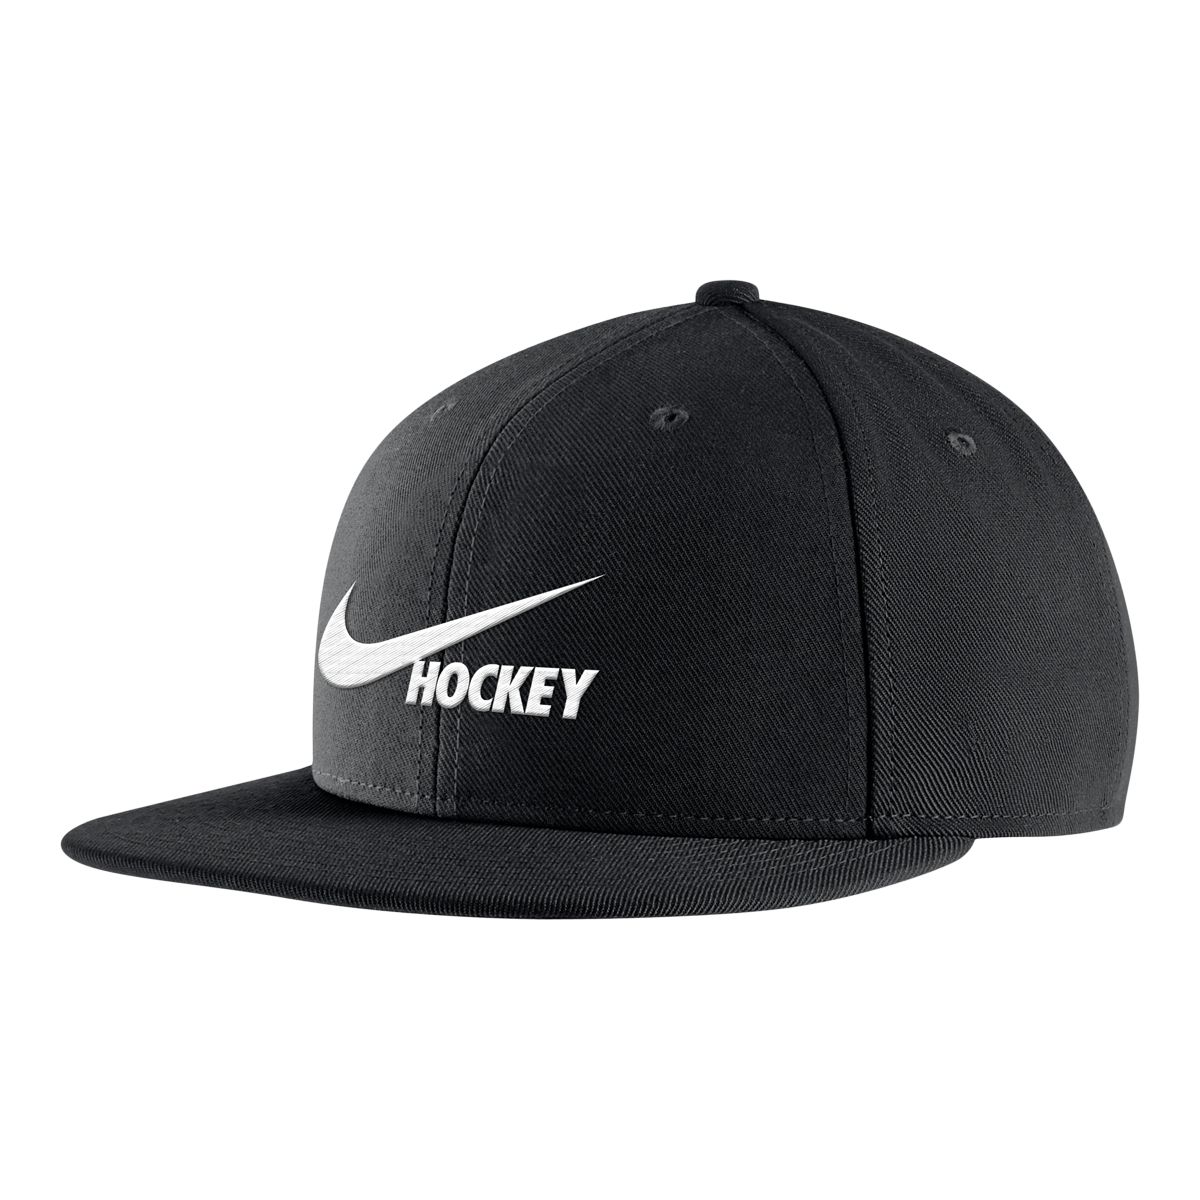 Nike Men's Hockey Pro Flatbill Cap